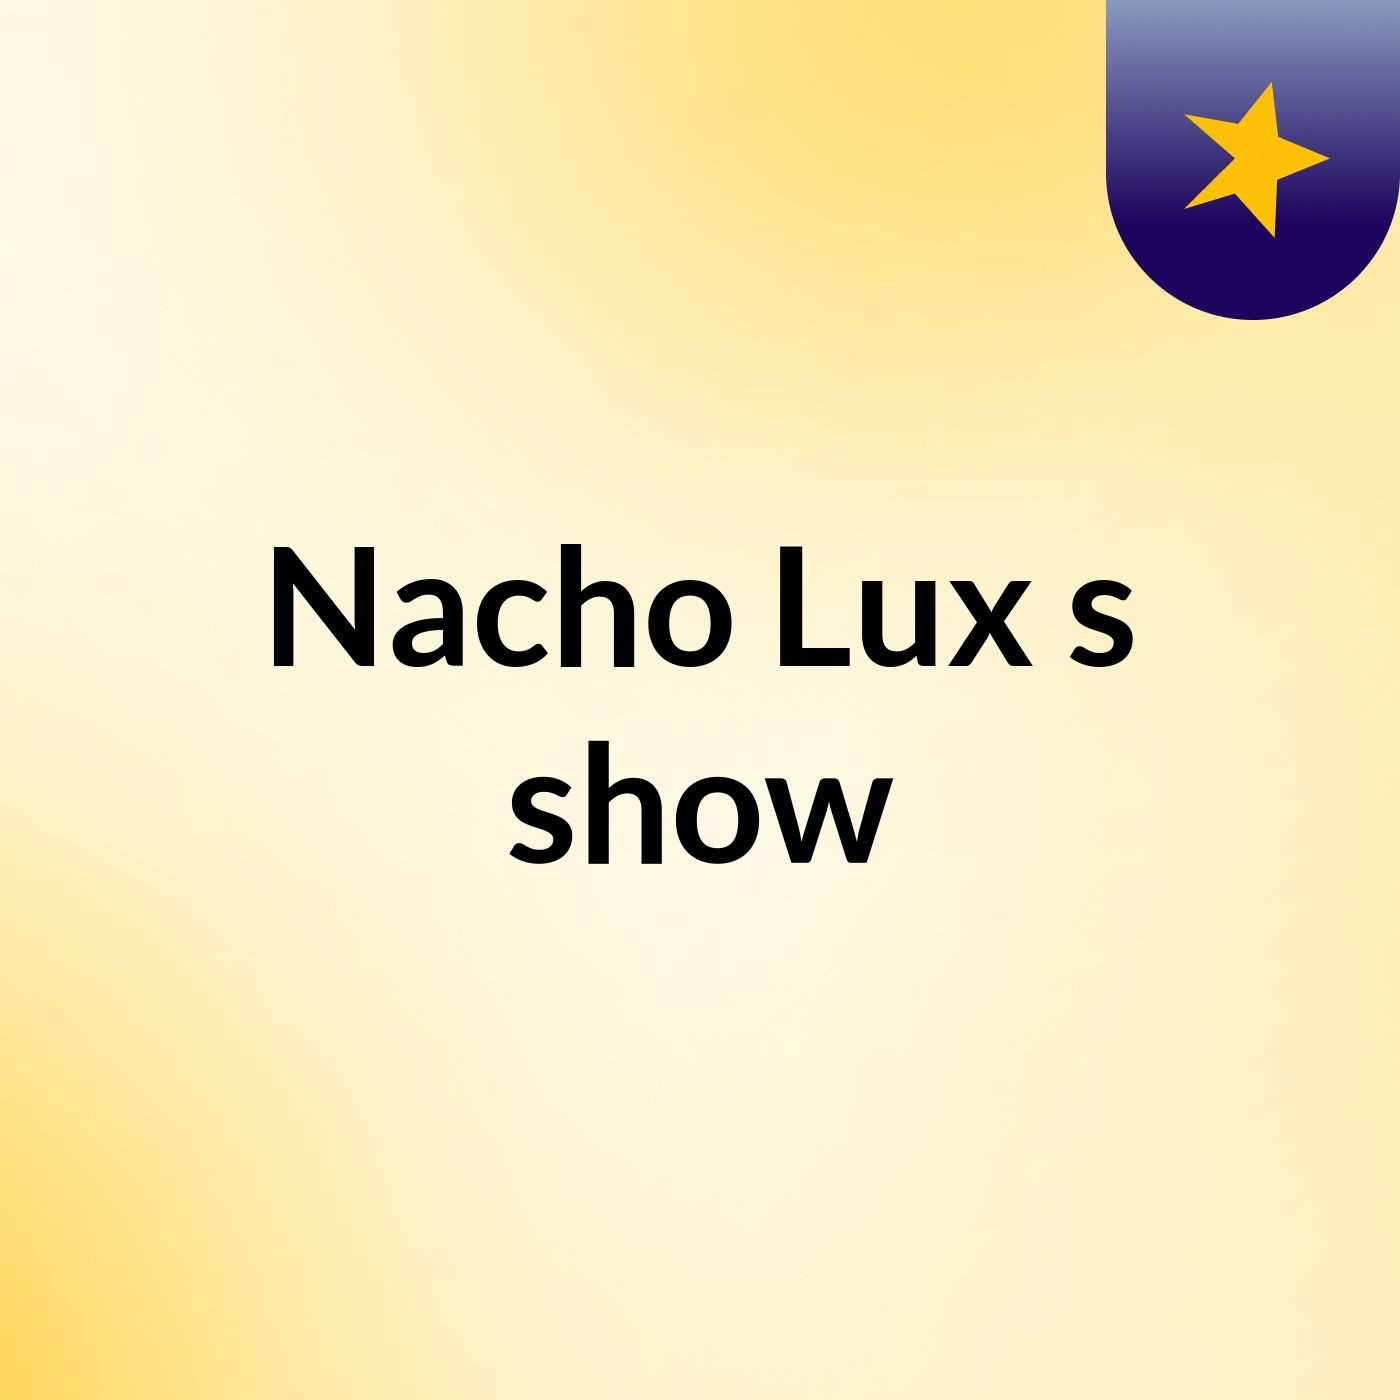 Nacho Lux's show